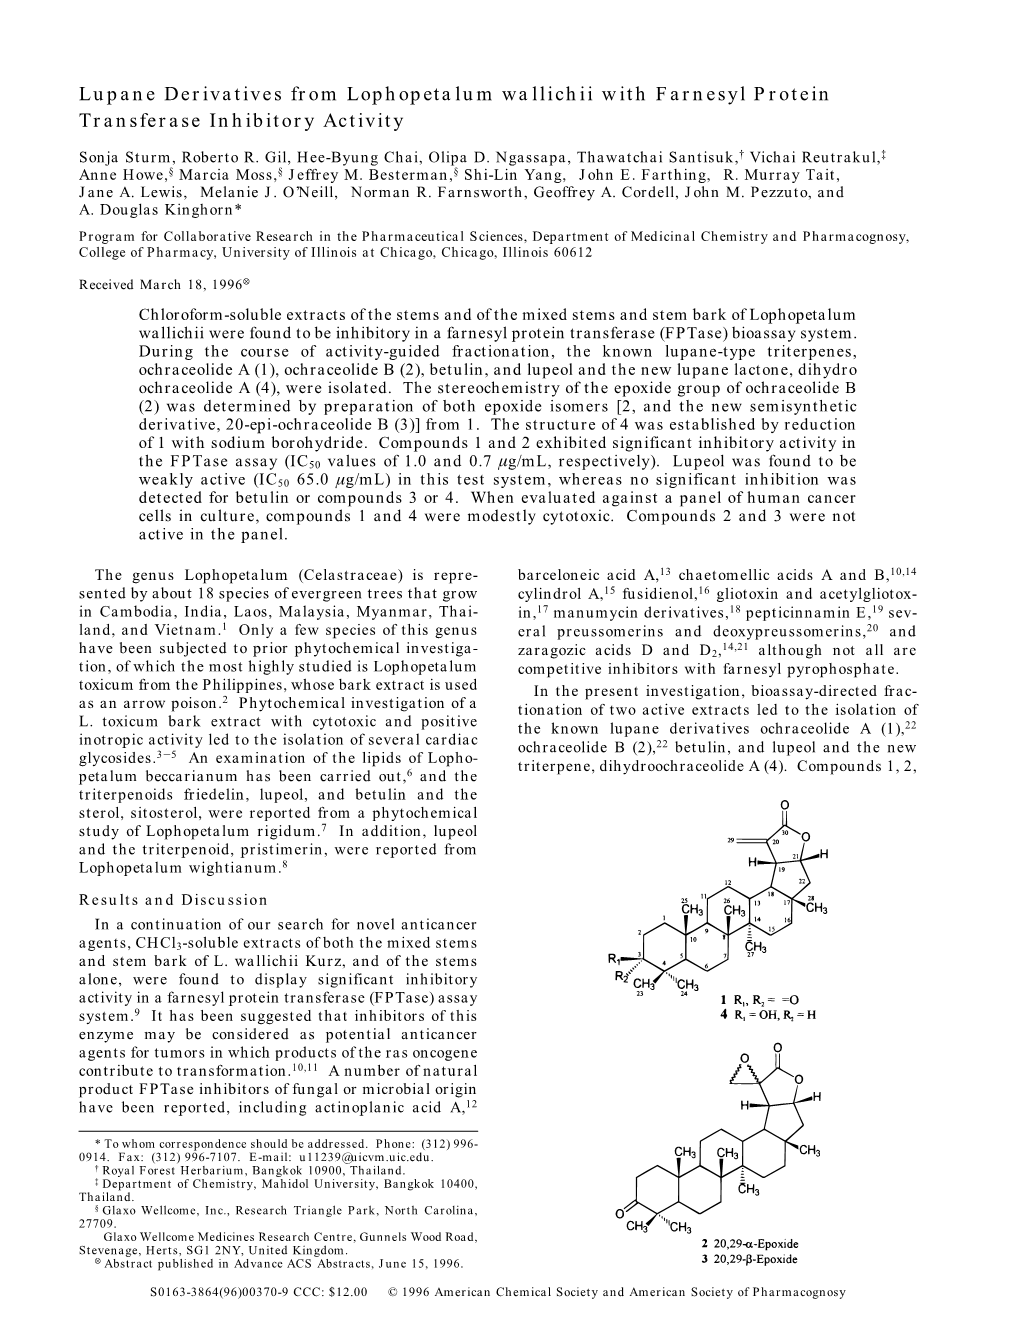 Lupane Derivatives from Lophopetalum Wallichii with Farnesyl Protein Transferase Inhibitory Activity